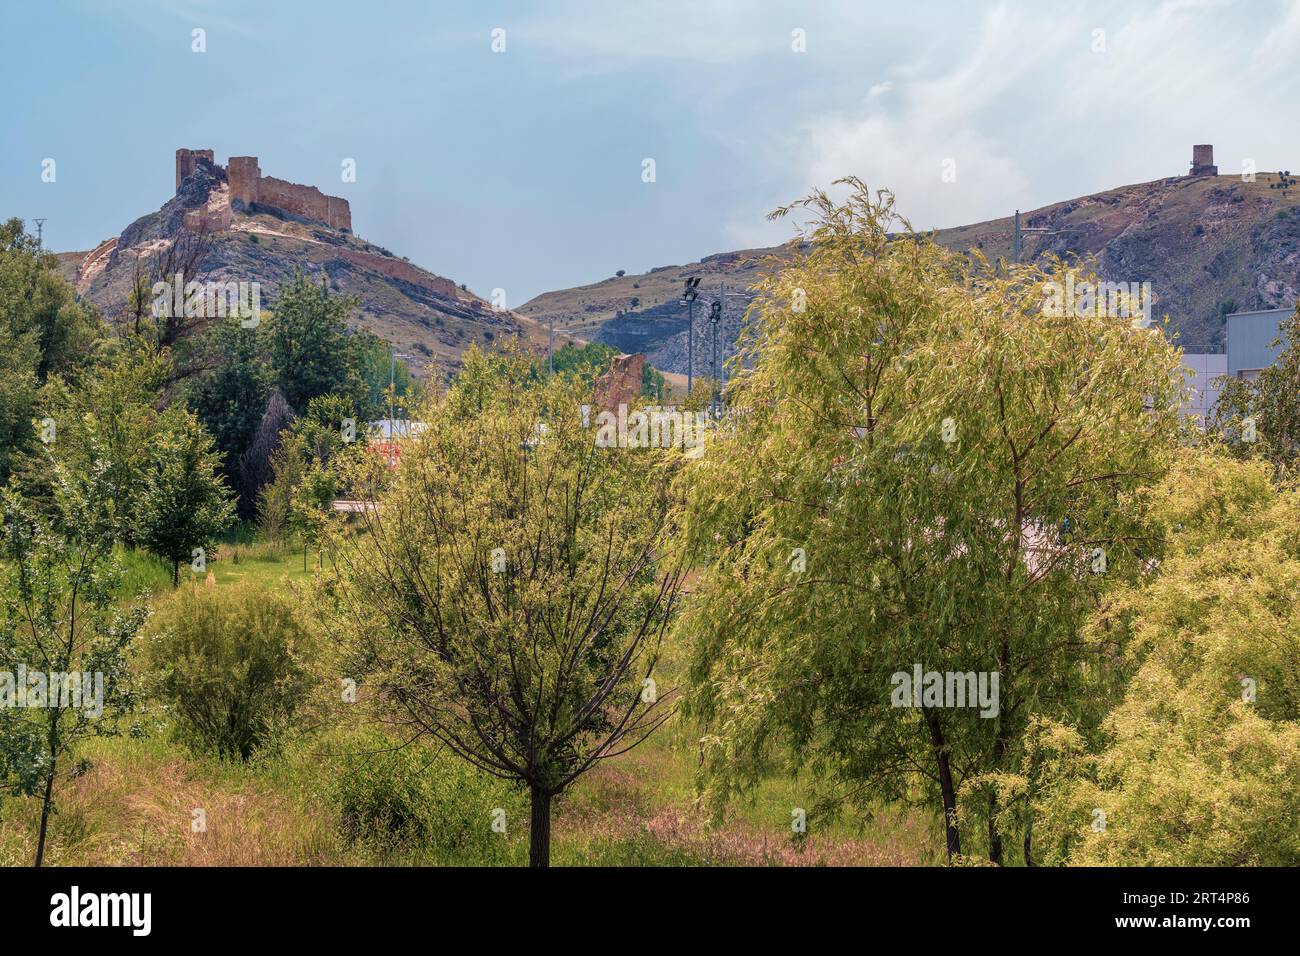 Osma Castle and the Uxama Watchtower in El Burgo de Osma-Ciudad de Osma, Soria, autonomous community of Castile and Leon, Spain Stock Photo